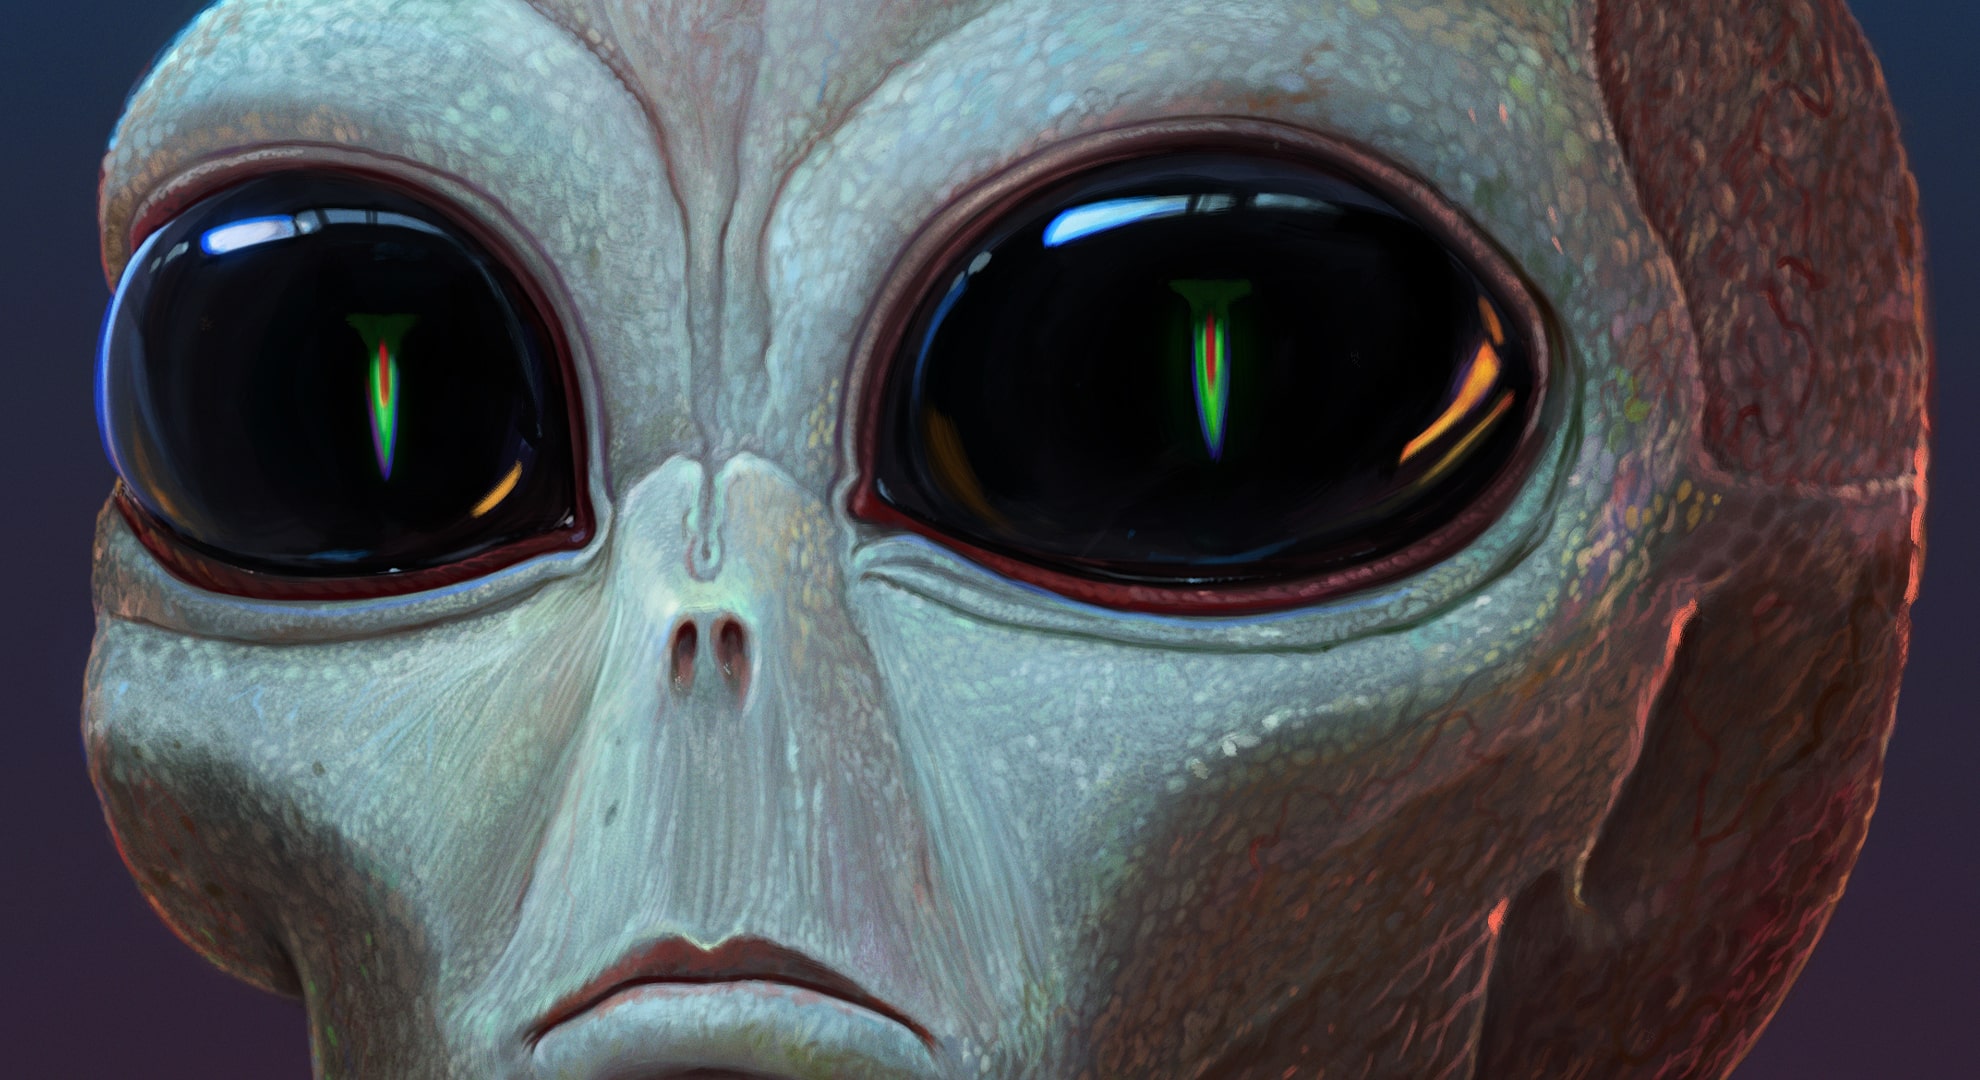 Close up shot of a grey alien's face